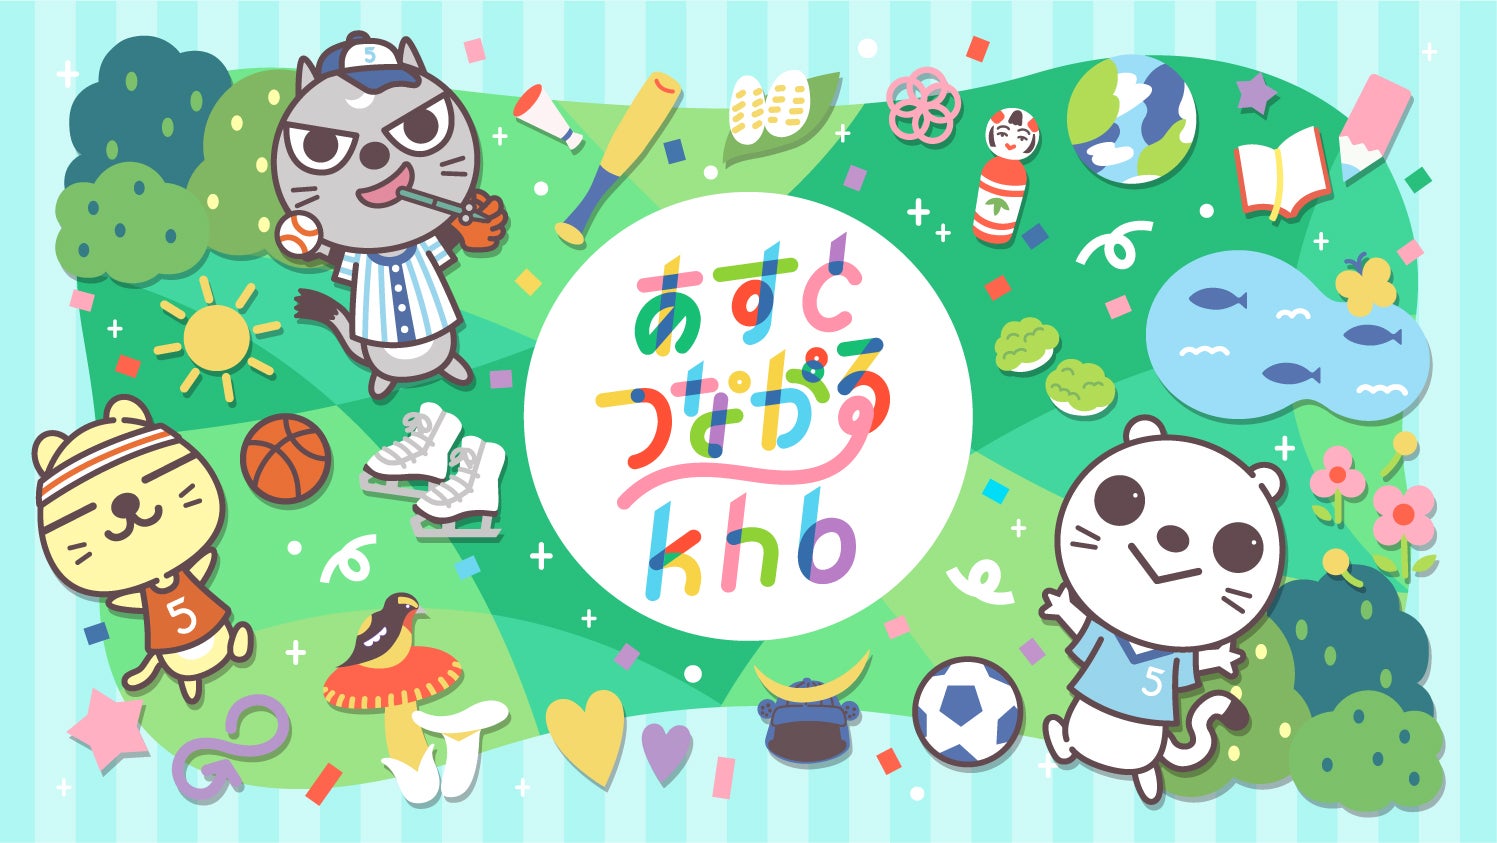 Top) Key visual for the special program “Asuto Tsunagara KHB”, bottom) Costumes of performers and staff